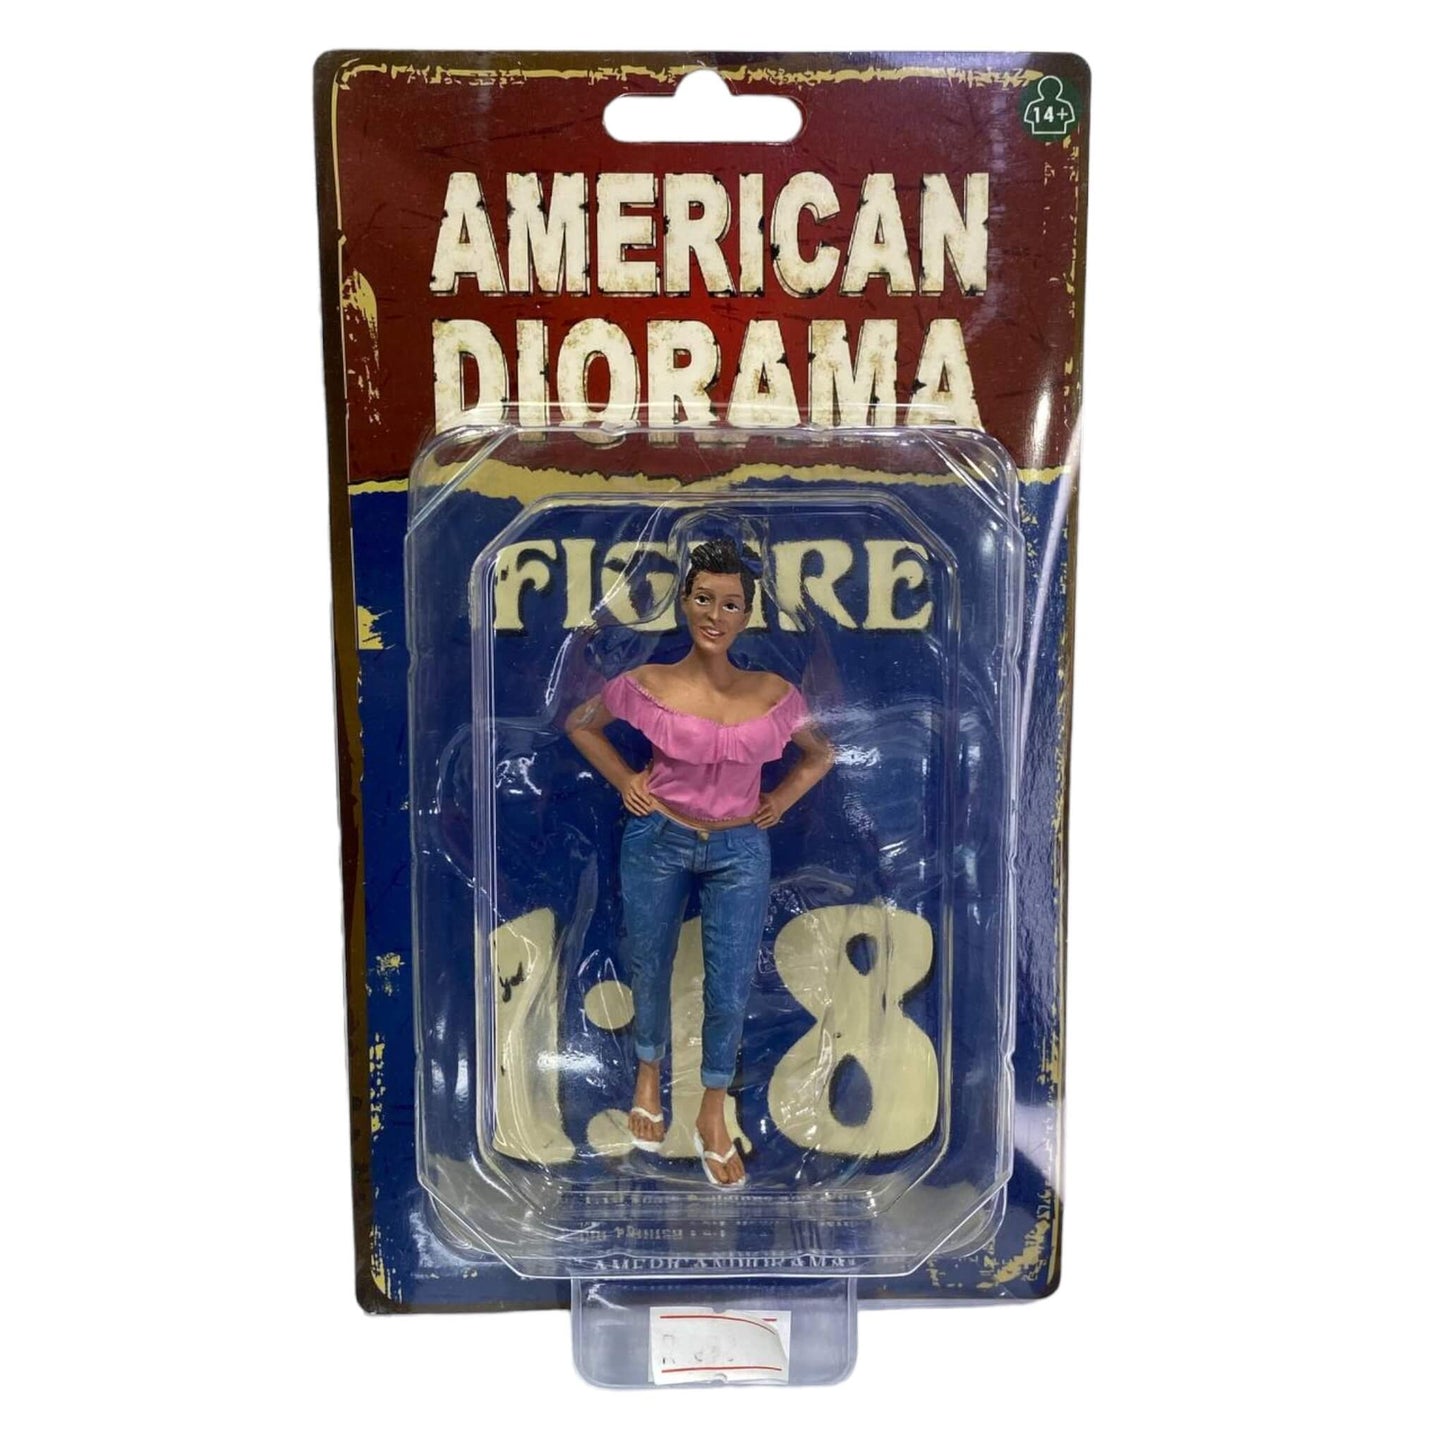 "Hazmat Crew Figure I" Miniature Figure by American Diorama (AD-76267)